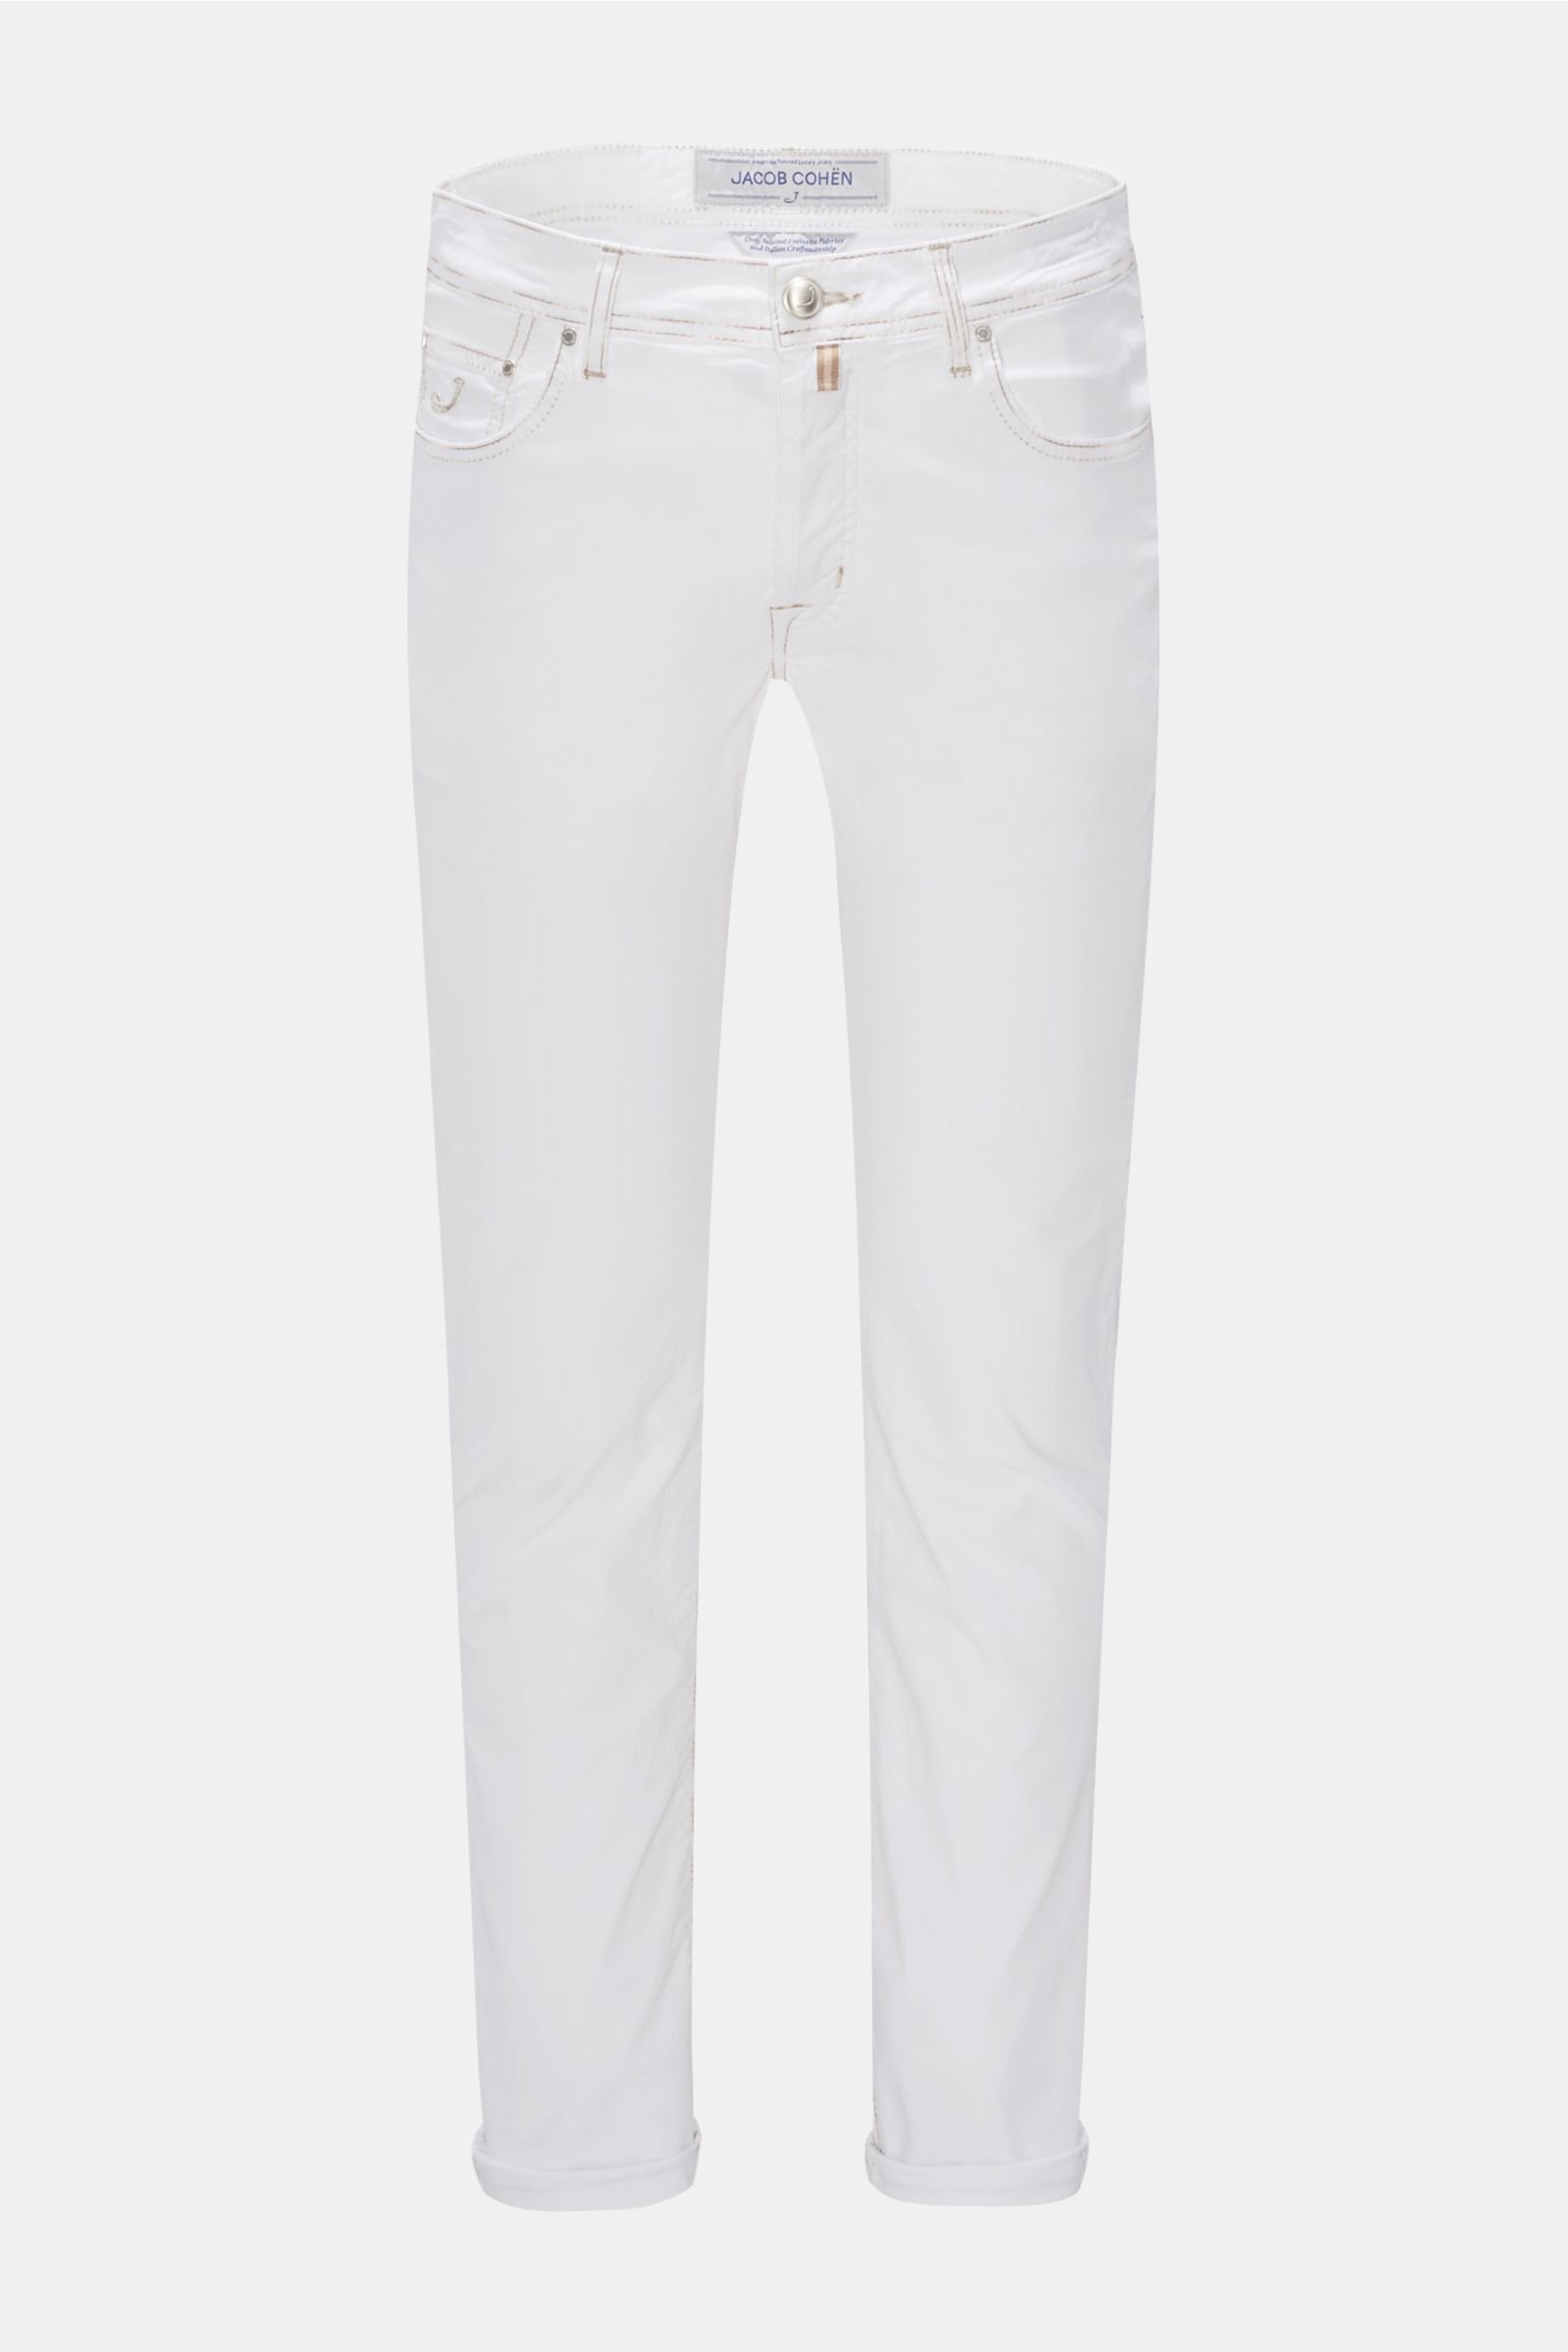 Cotton trousers 'J688 Comfort Slim Fit' white